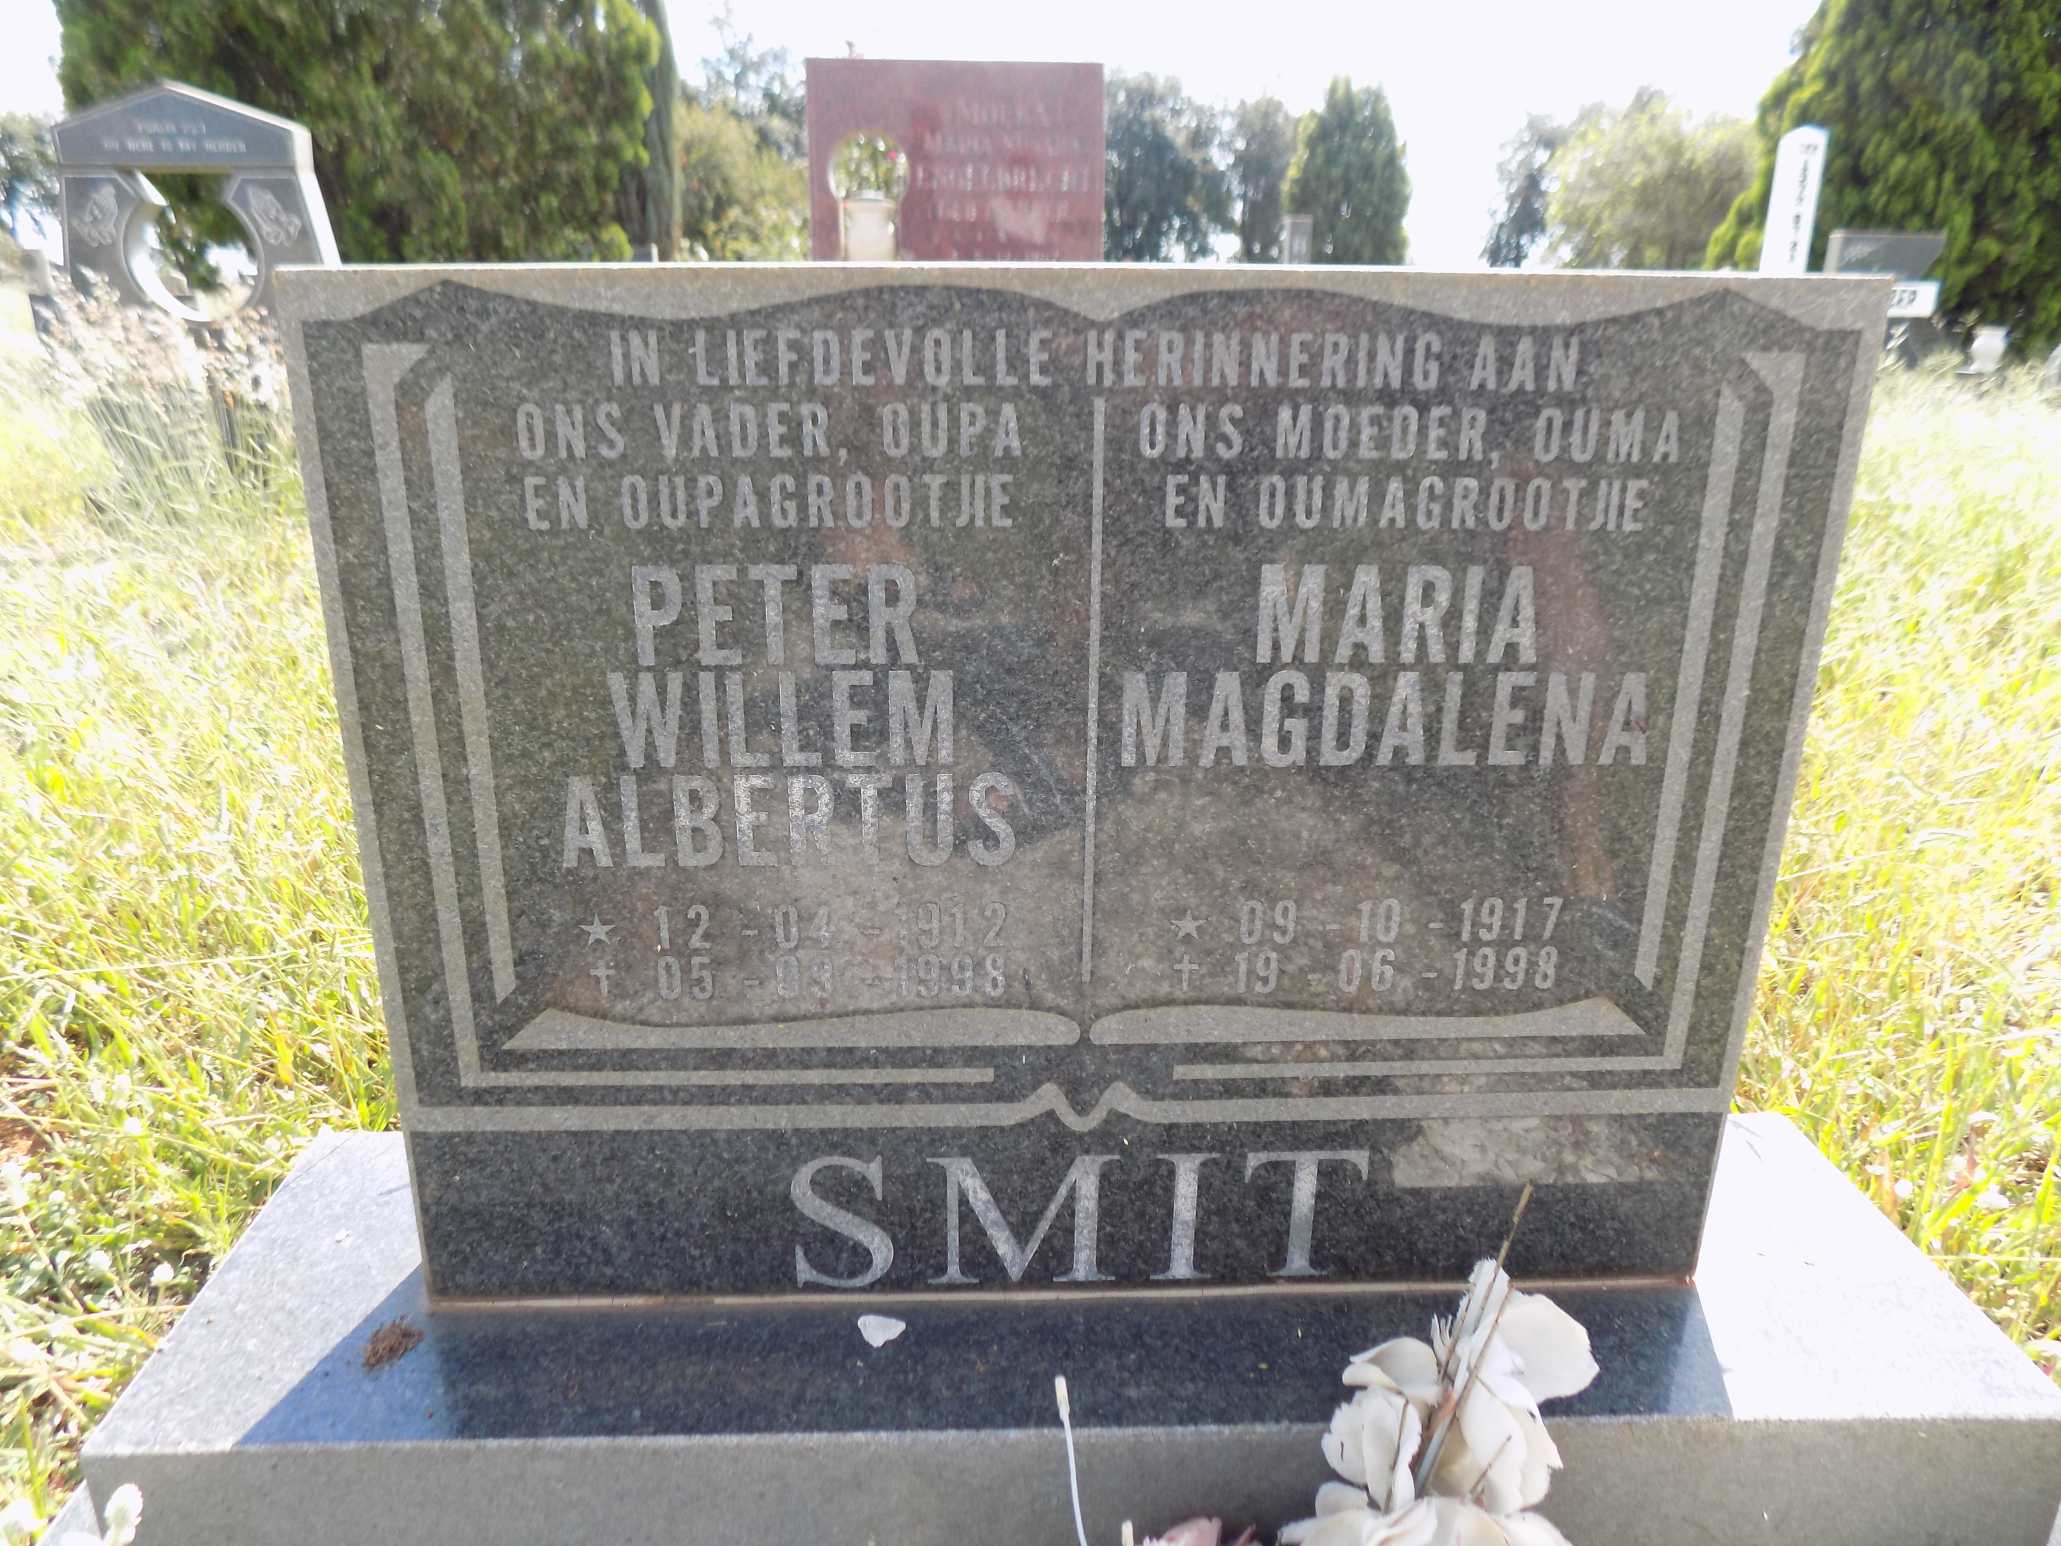 SMIT Peter Willem Albertus 1912-1998 & Maria Magdalena 1917-1998